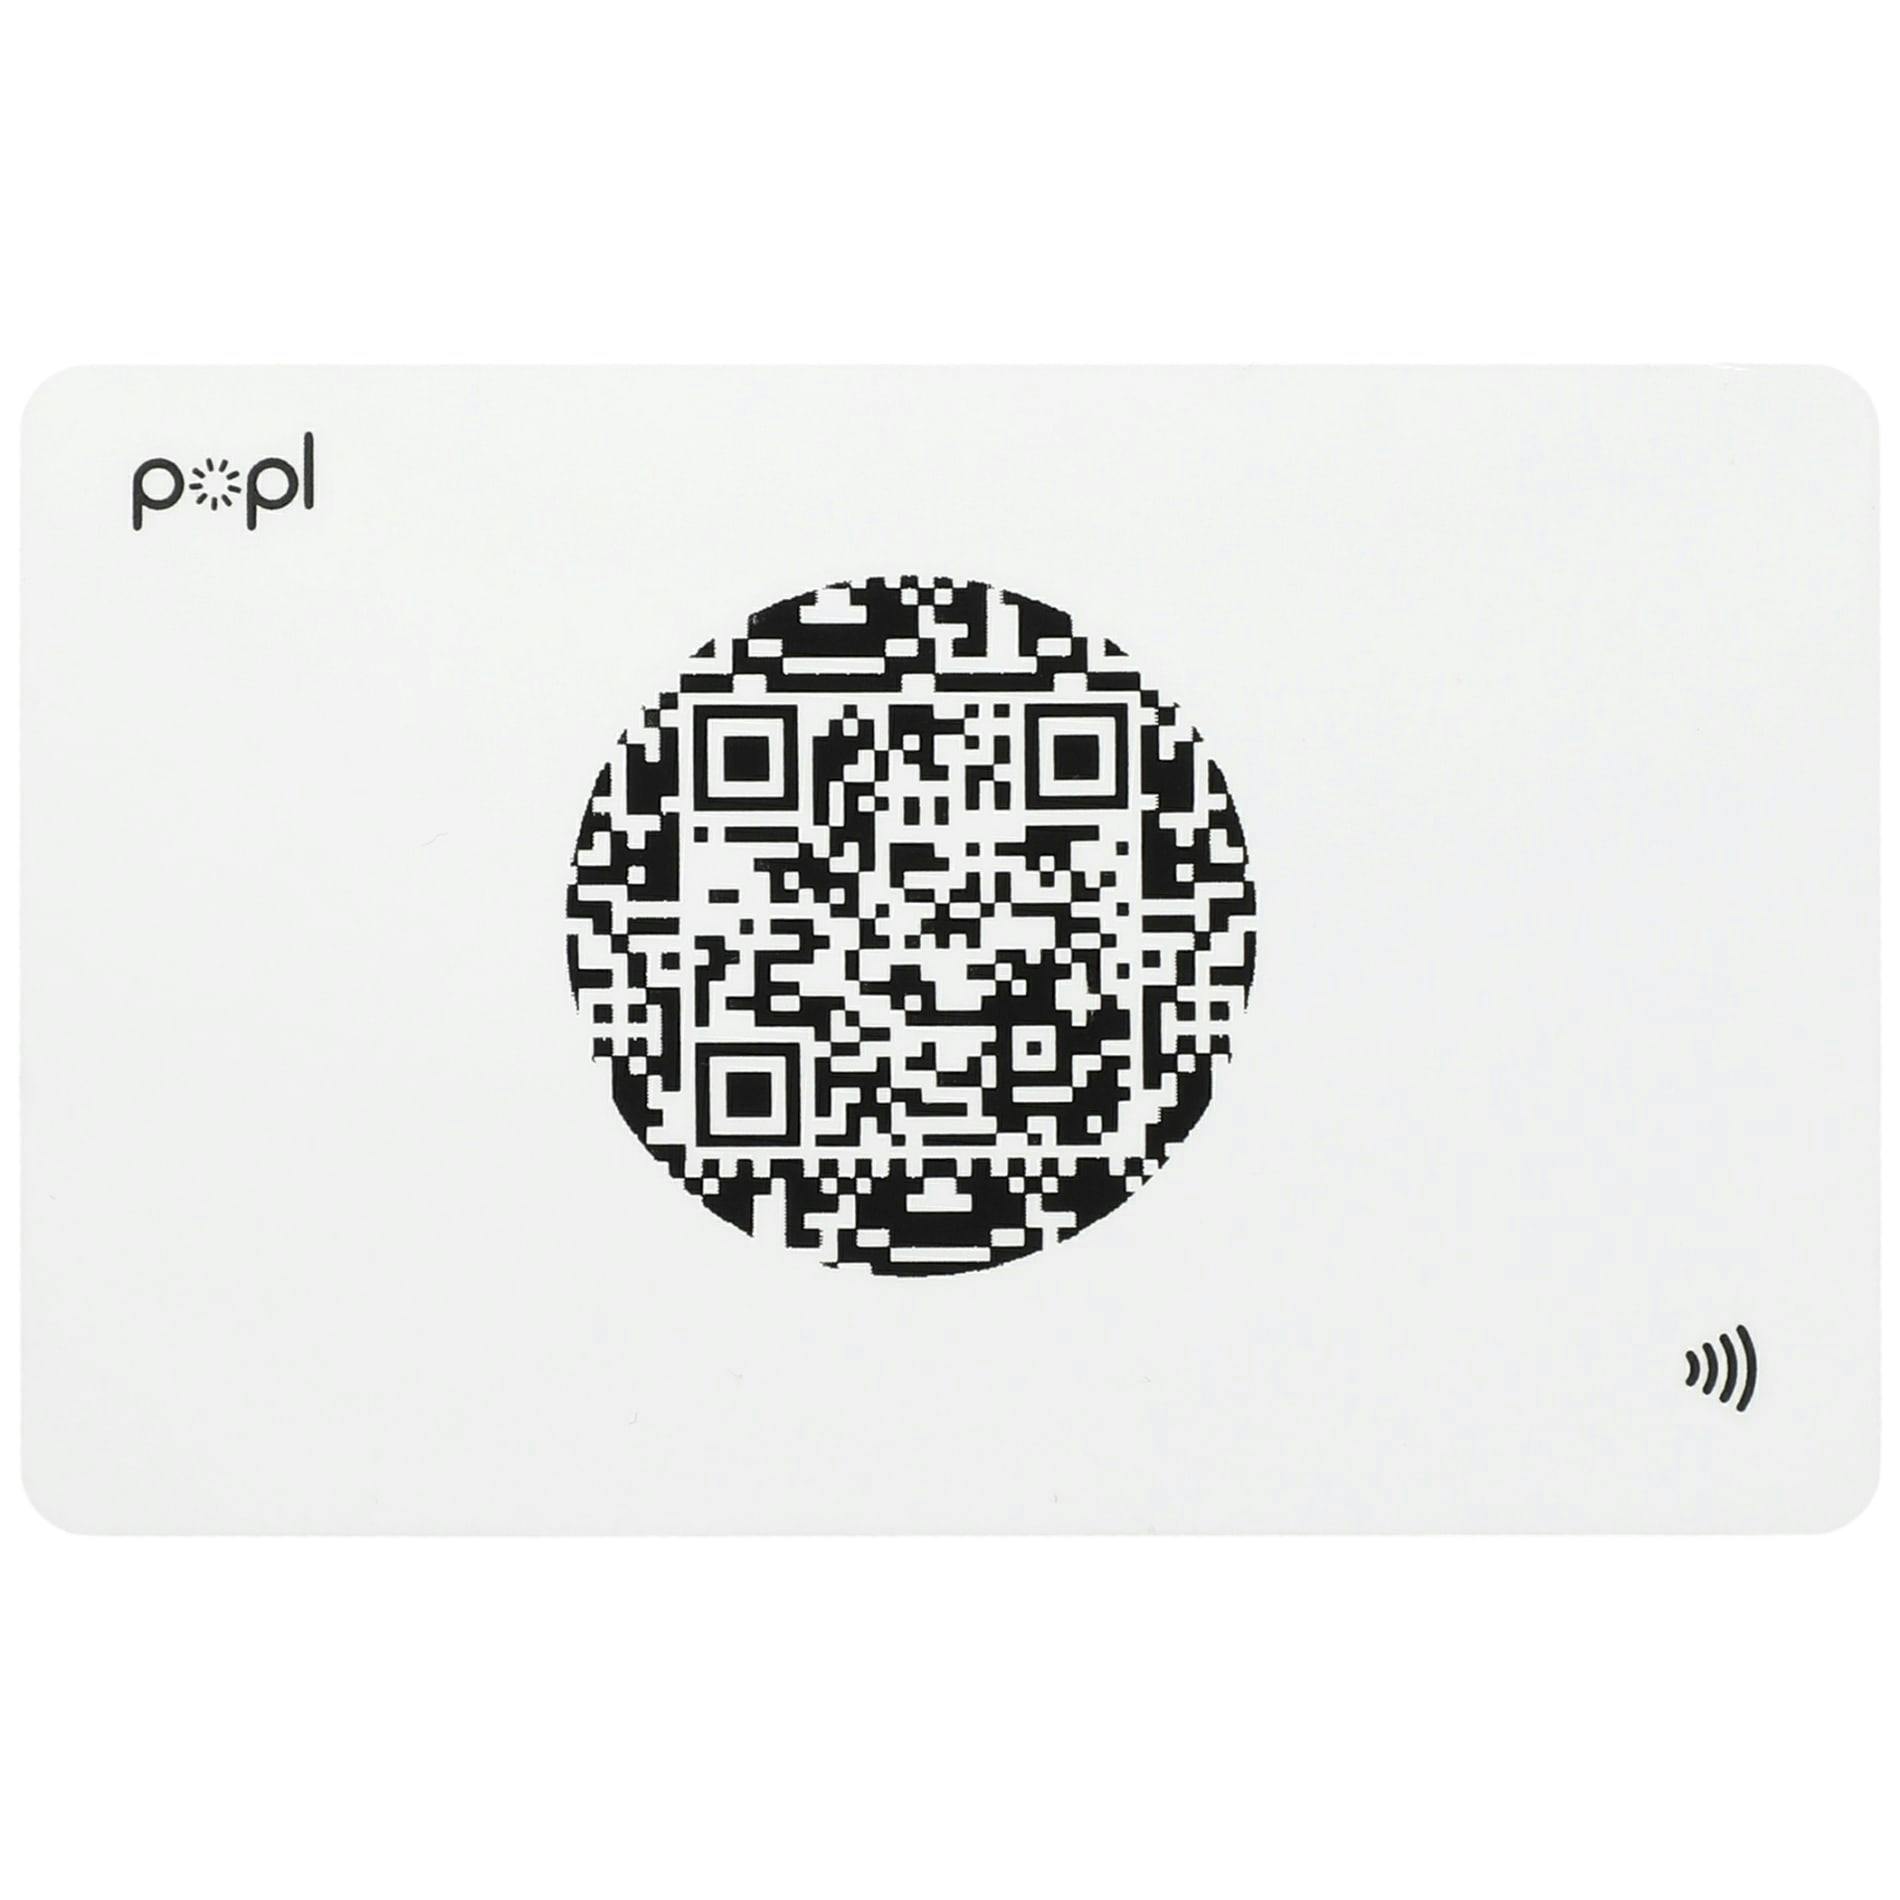 Popl Digital Business Card - additional Image 4